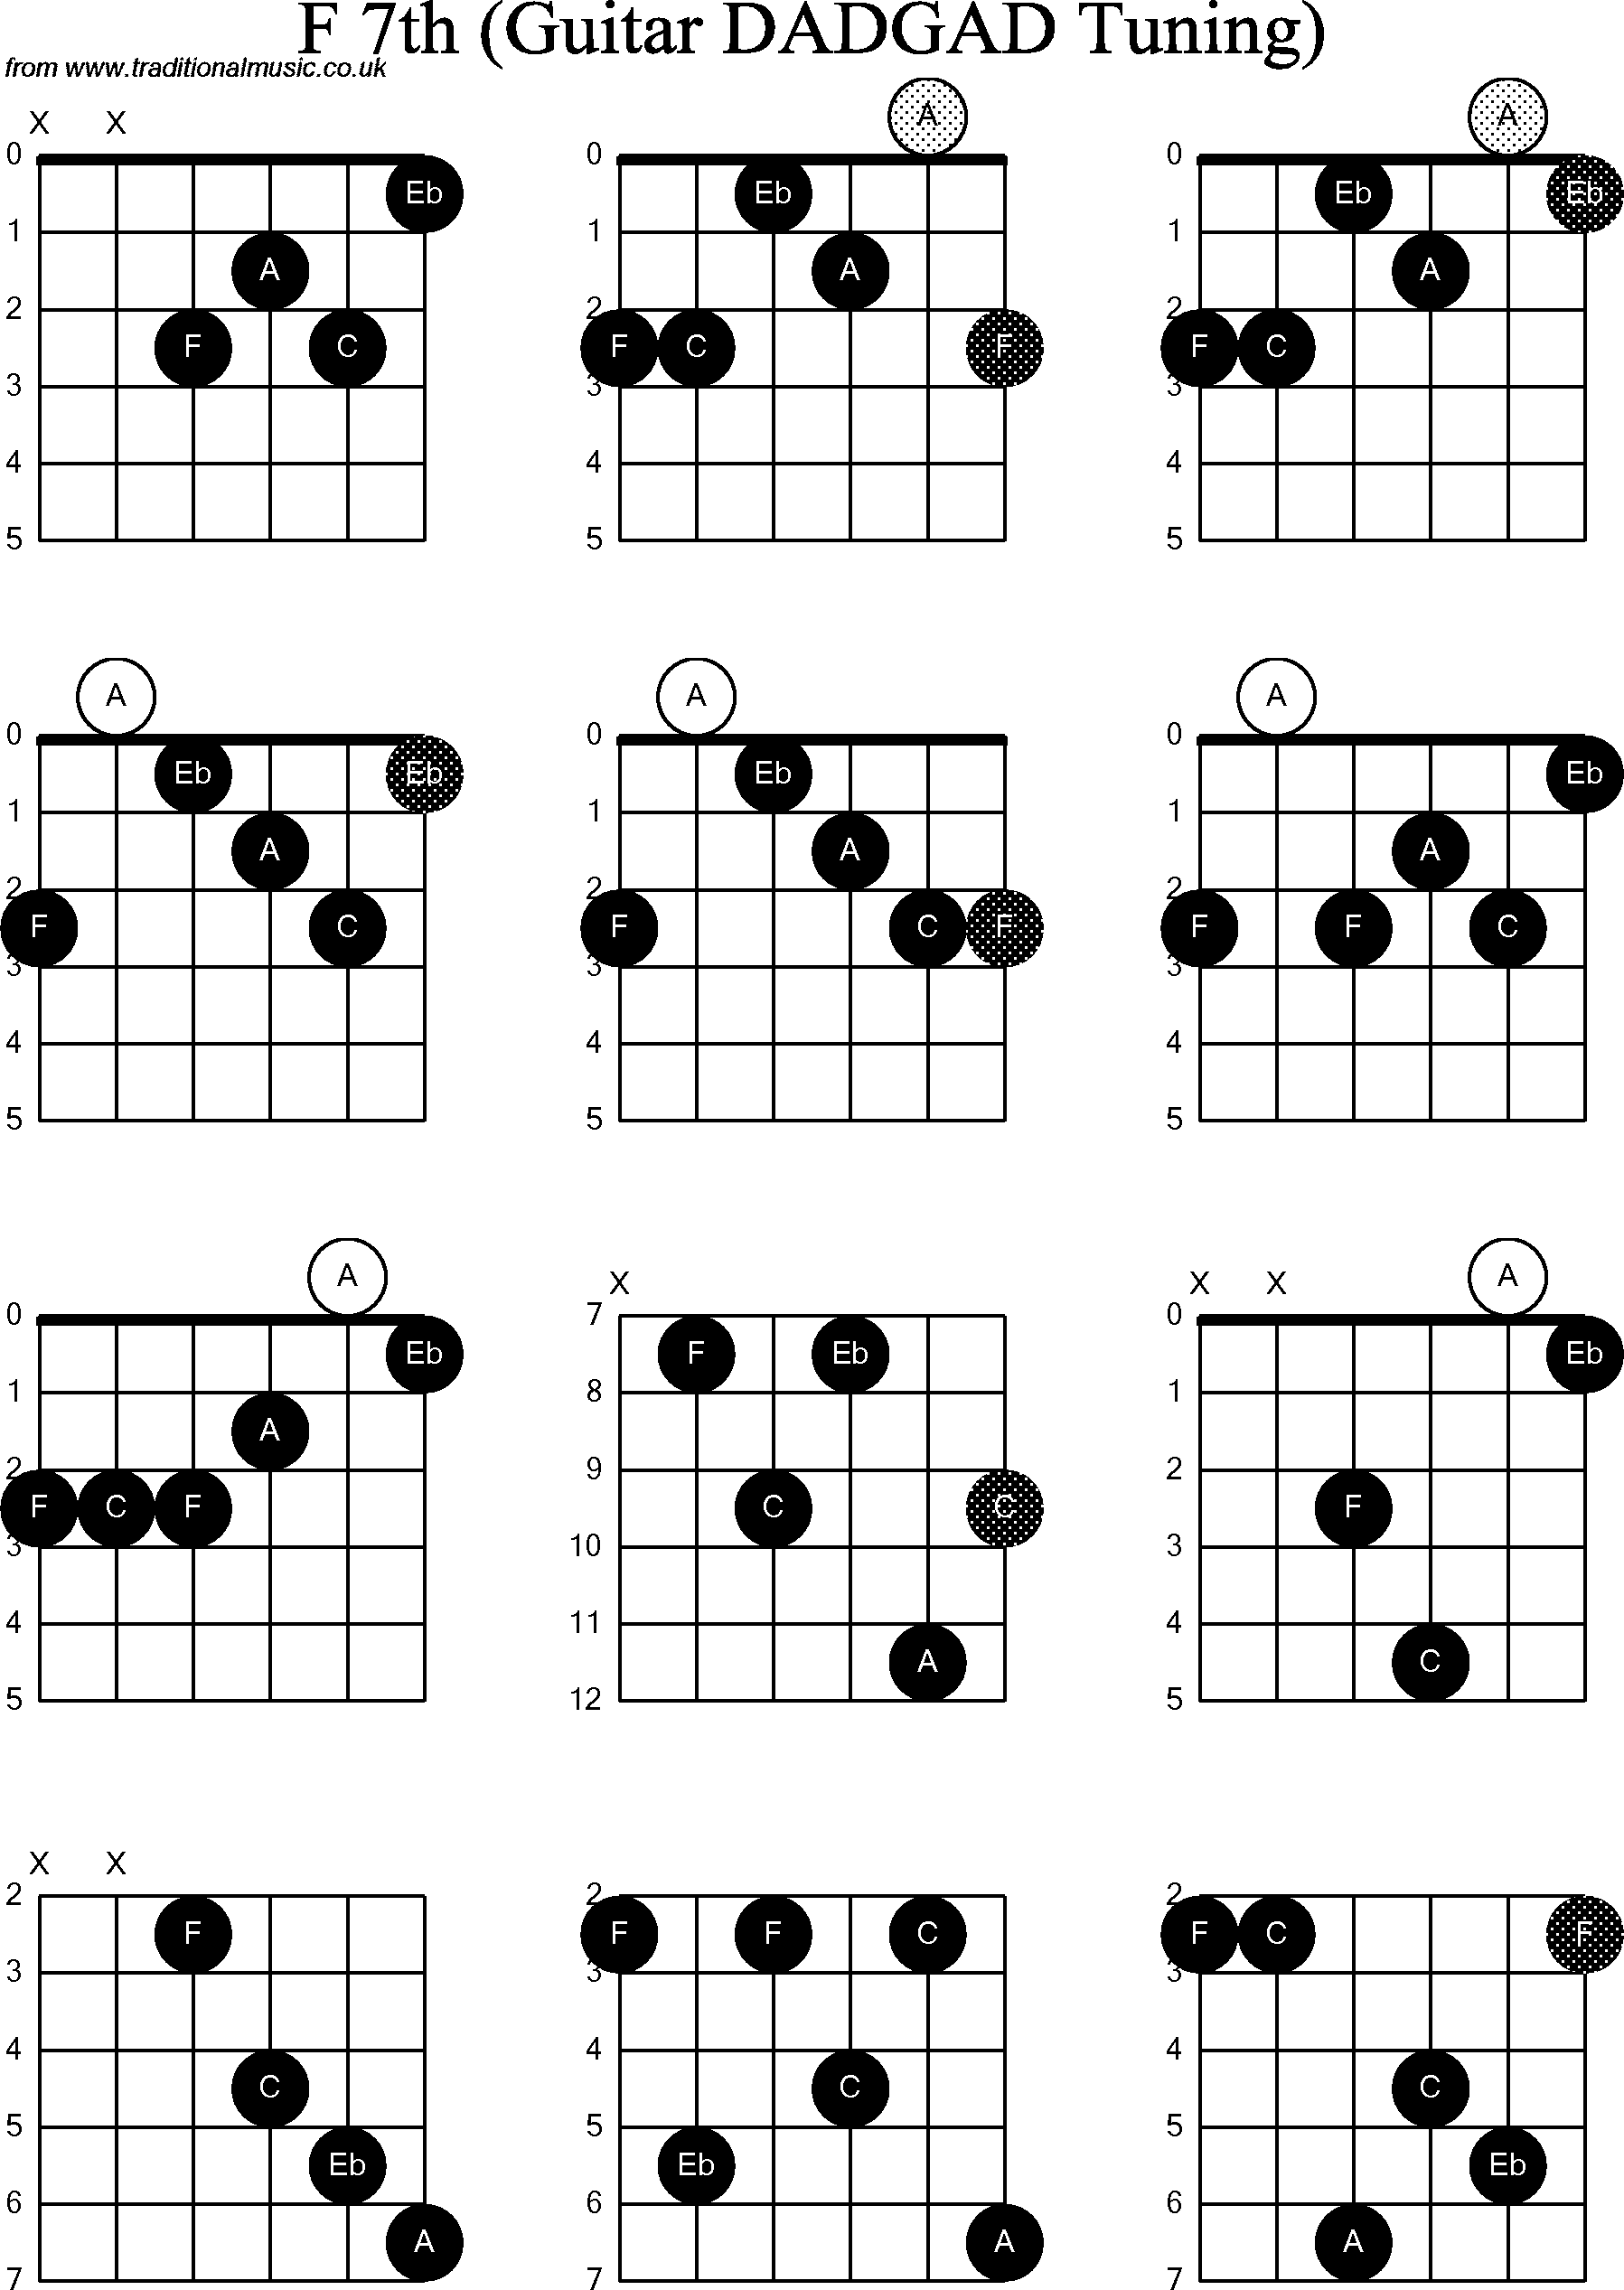 Chord Diagrams D Modal Guitar Dadgad F Th | SexiezPicz Web Porn